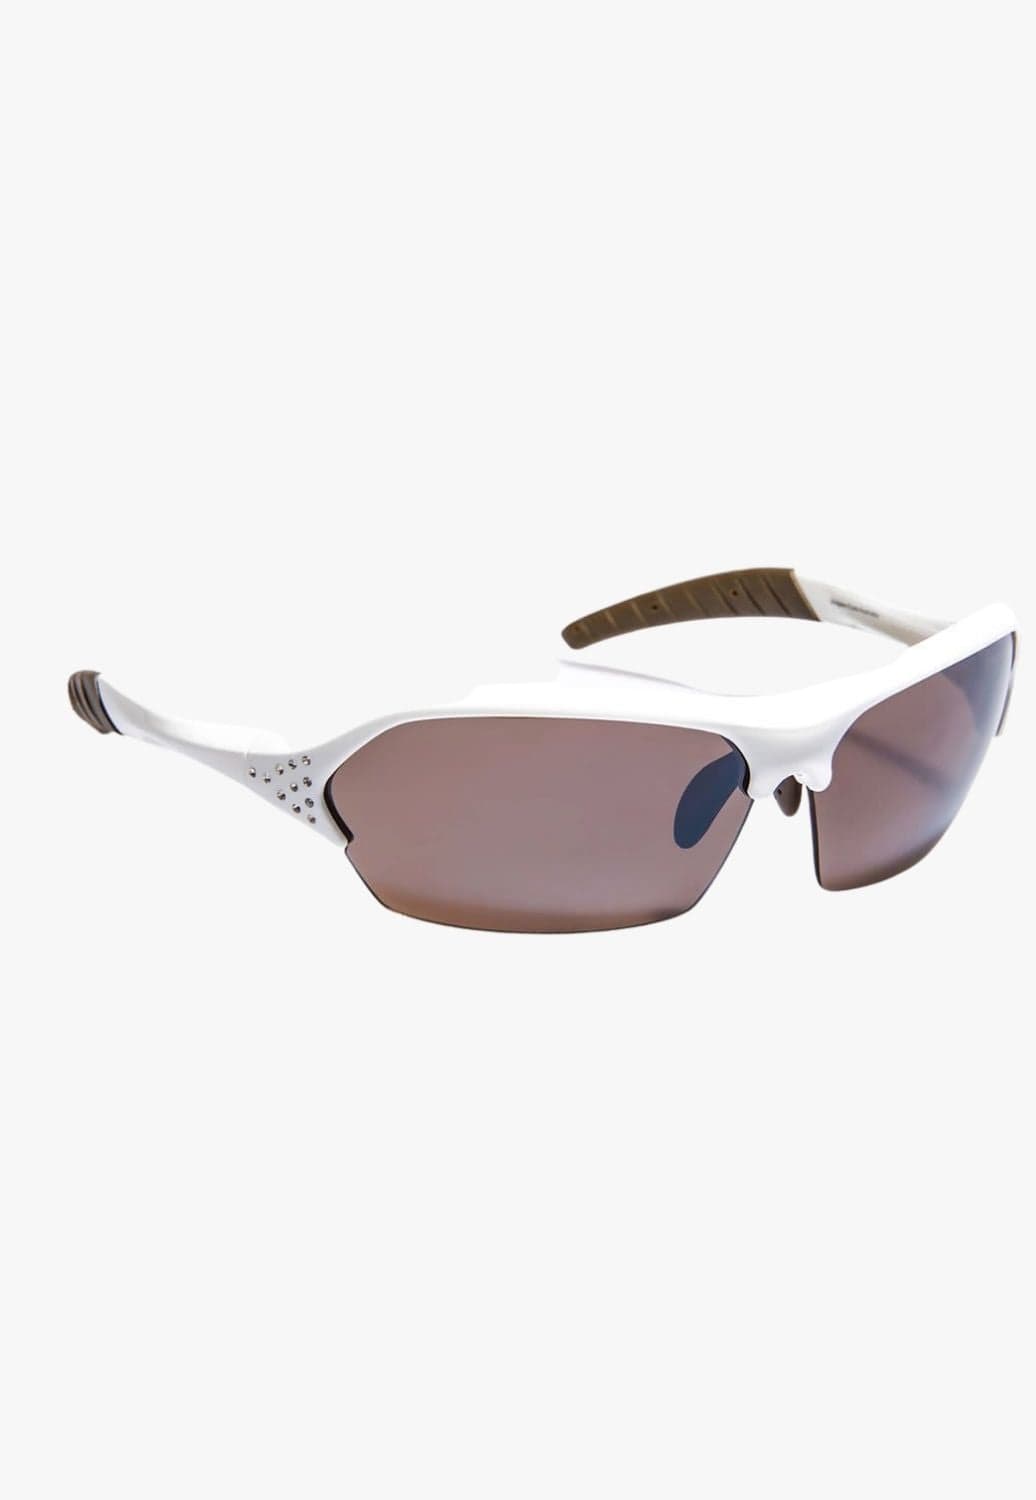 Gidgee Eyes ACCESSORIES-Sunglasses OSFA / White Gidgee Eyes Liberty Sunglasses